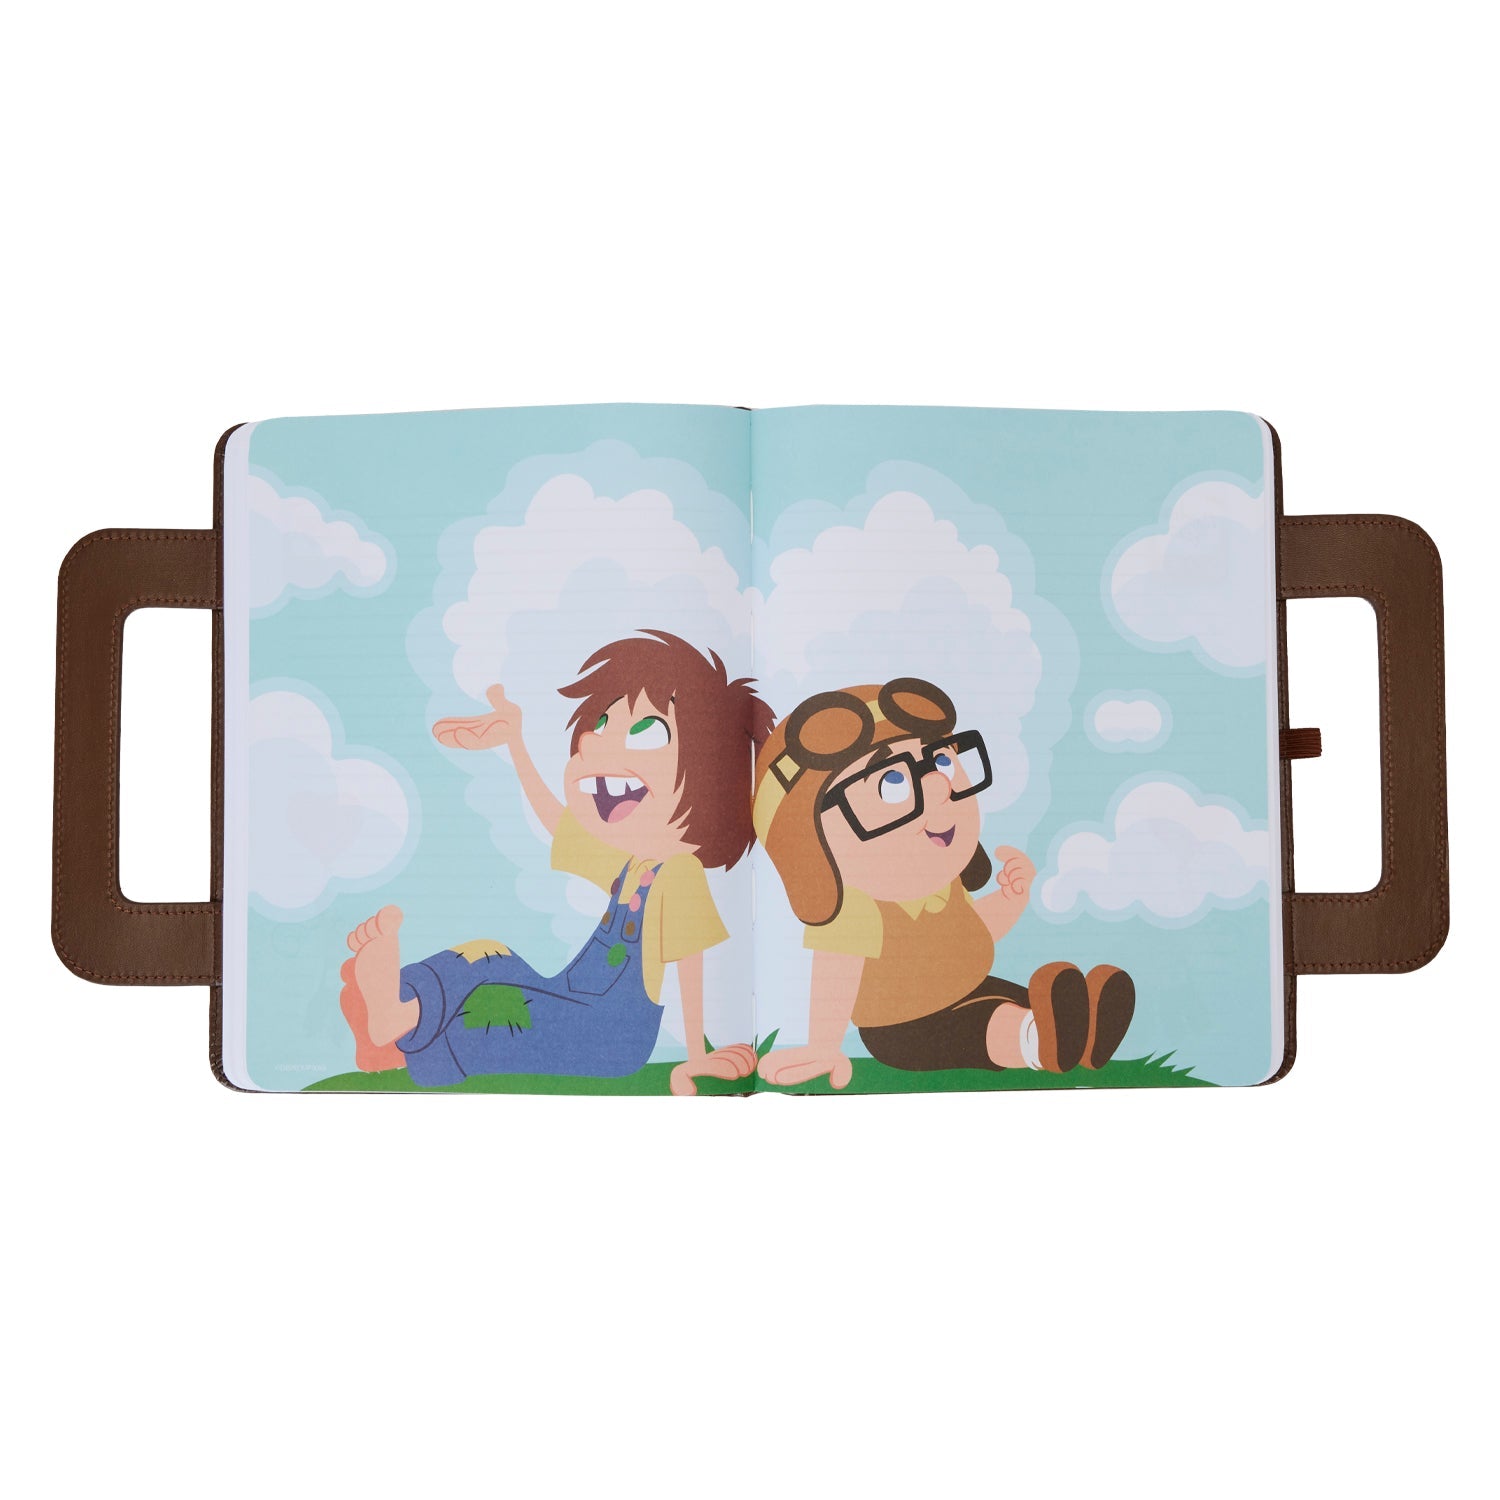 Loungefly x Disney Pixar Up 15th Anniversary Adventure Book Lunchbox Journal - GeekCore